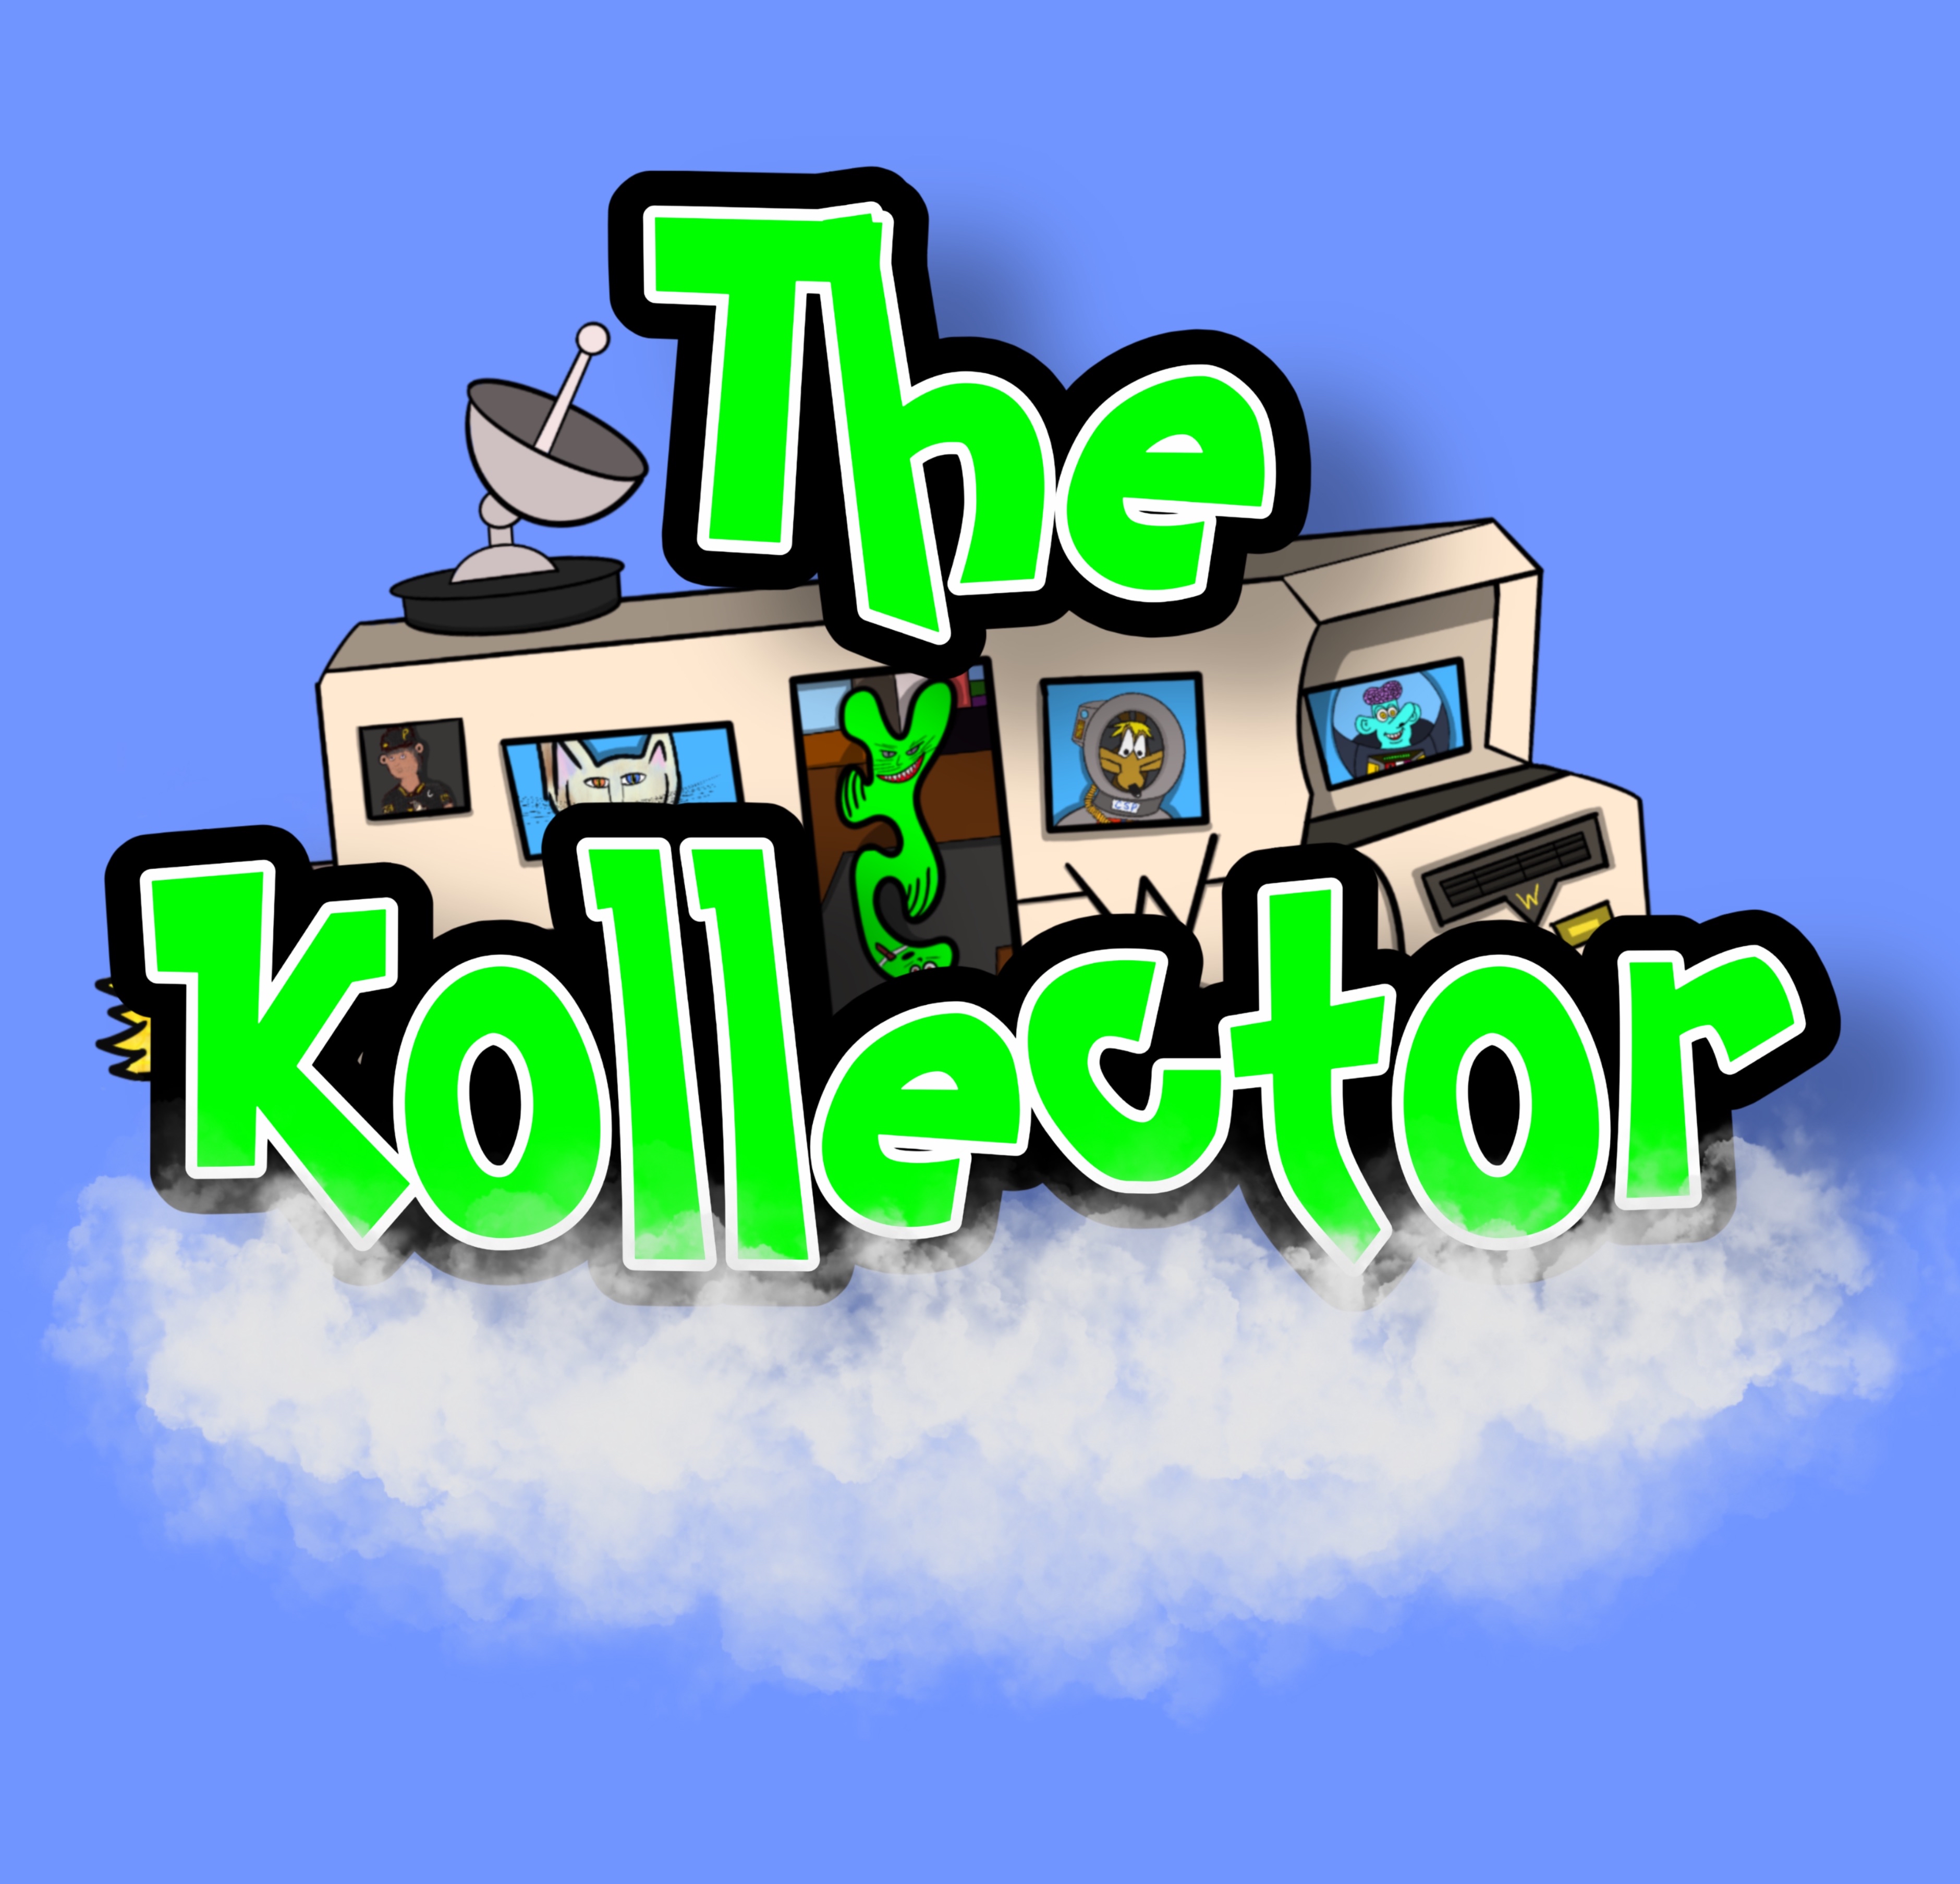 The Kollector